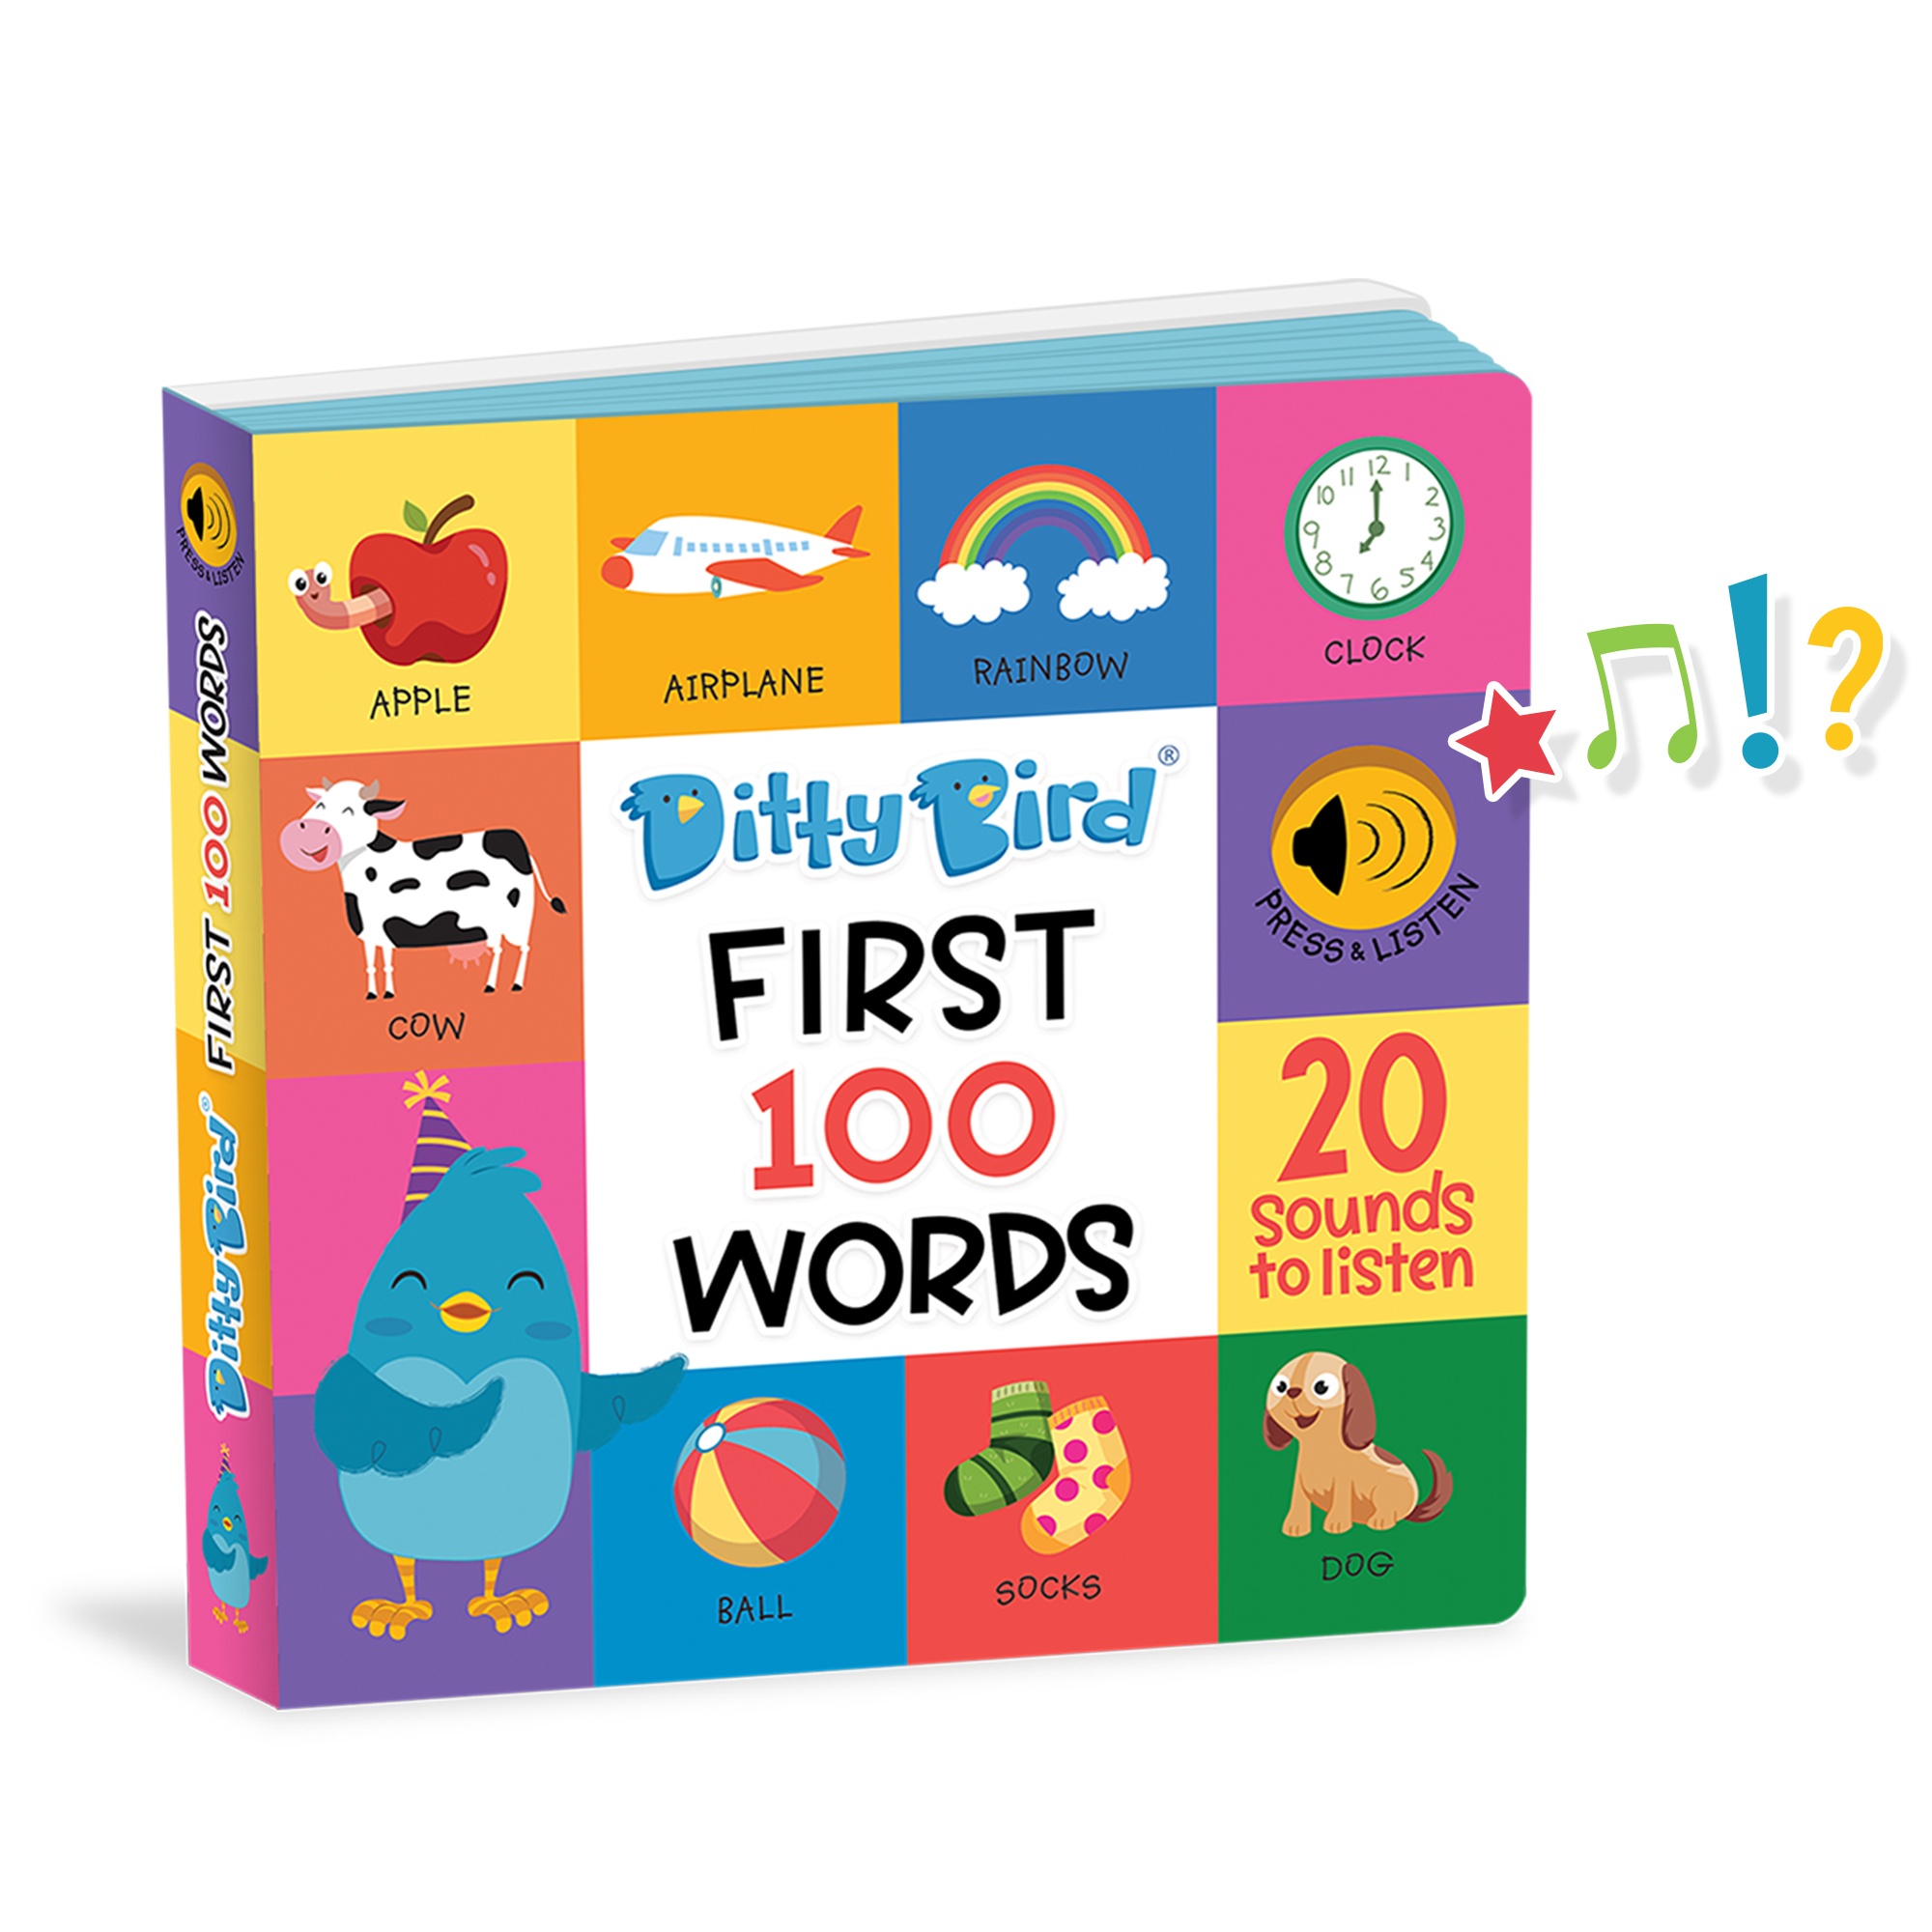 Ditty Bird First 100 Words Interactive Book